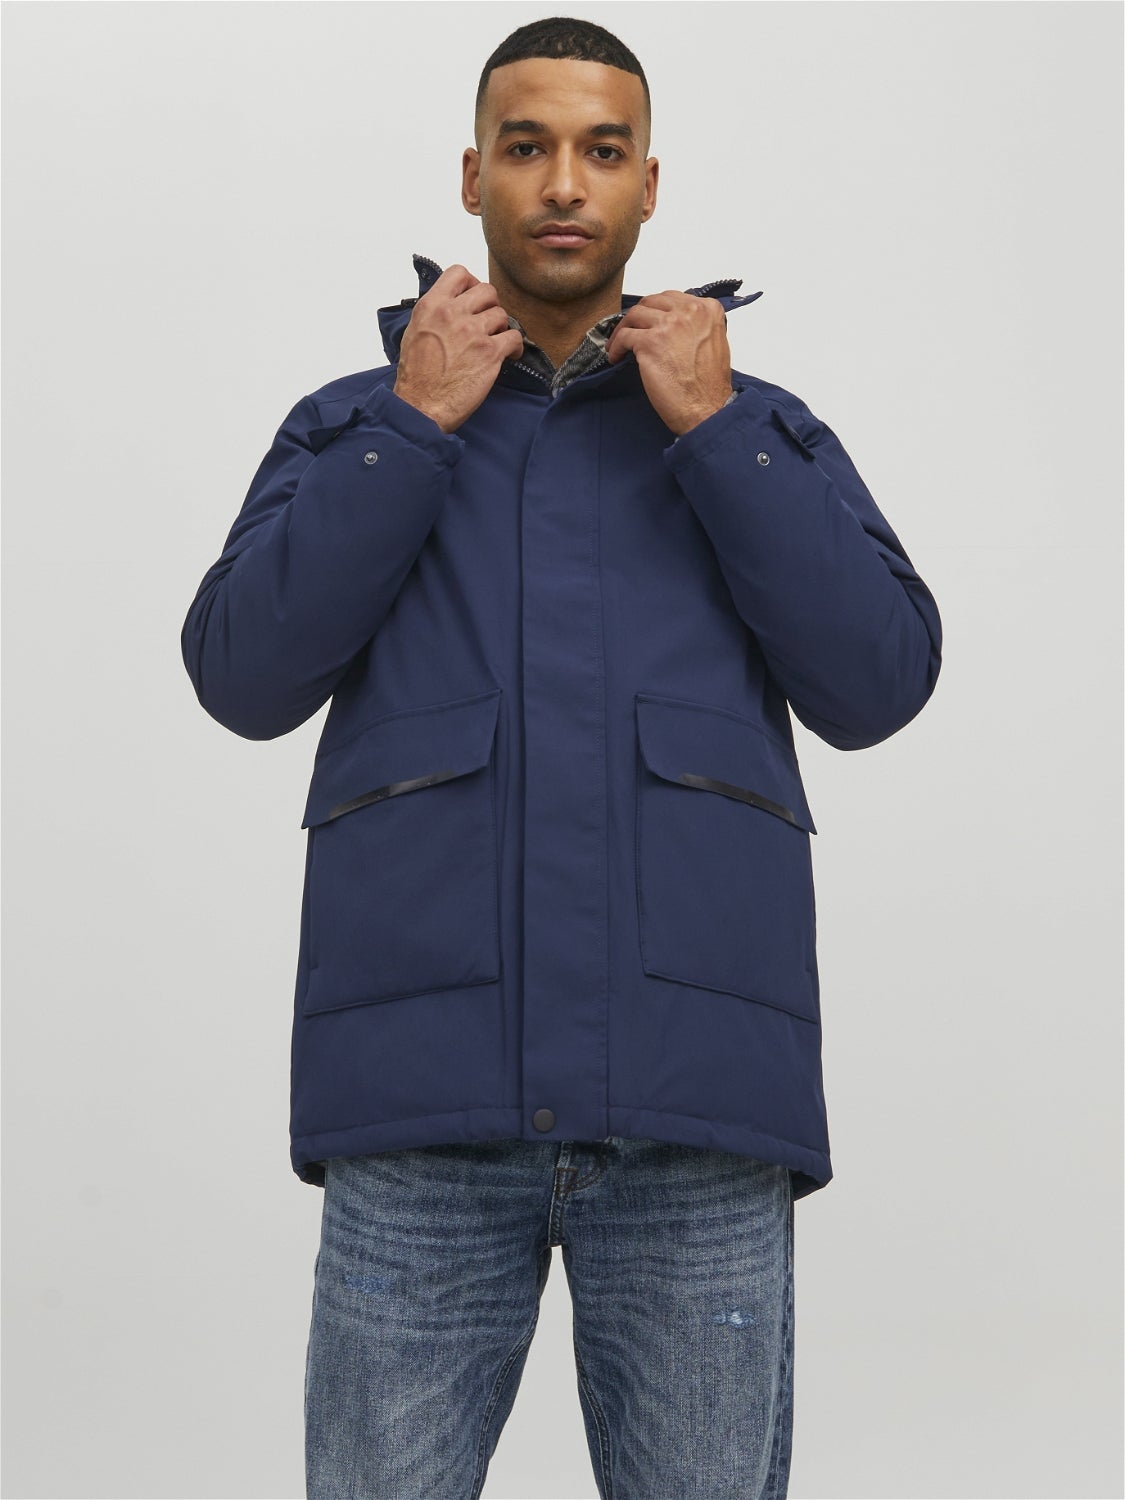 Jack & Jones Jack & Jones denim jacket MEN FASHION Jackets Jean discount 63% Blue/Navy Blue/Black L 